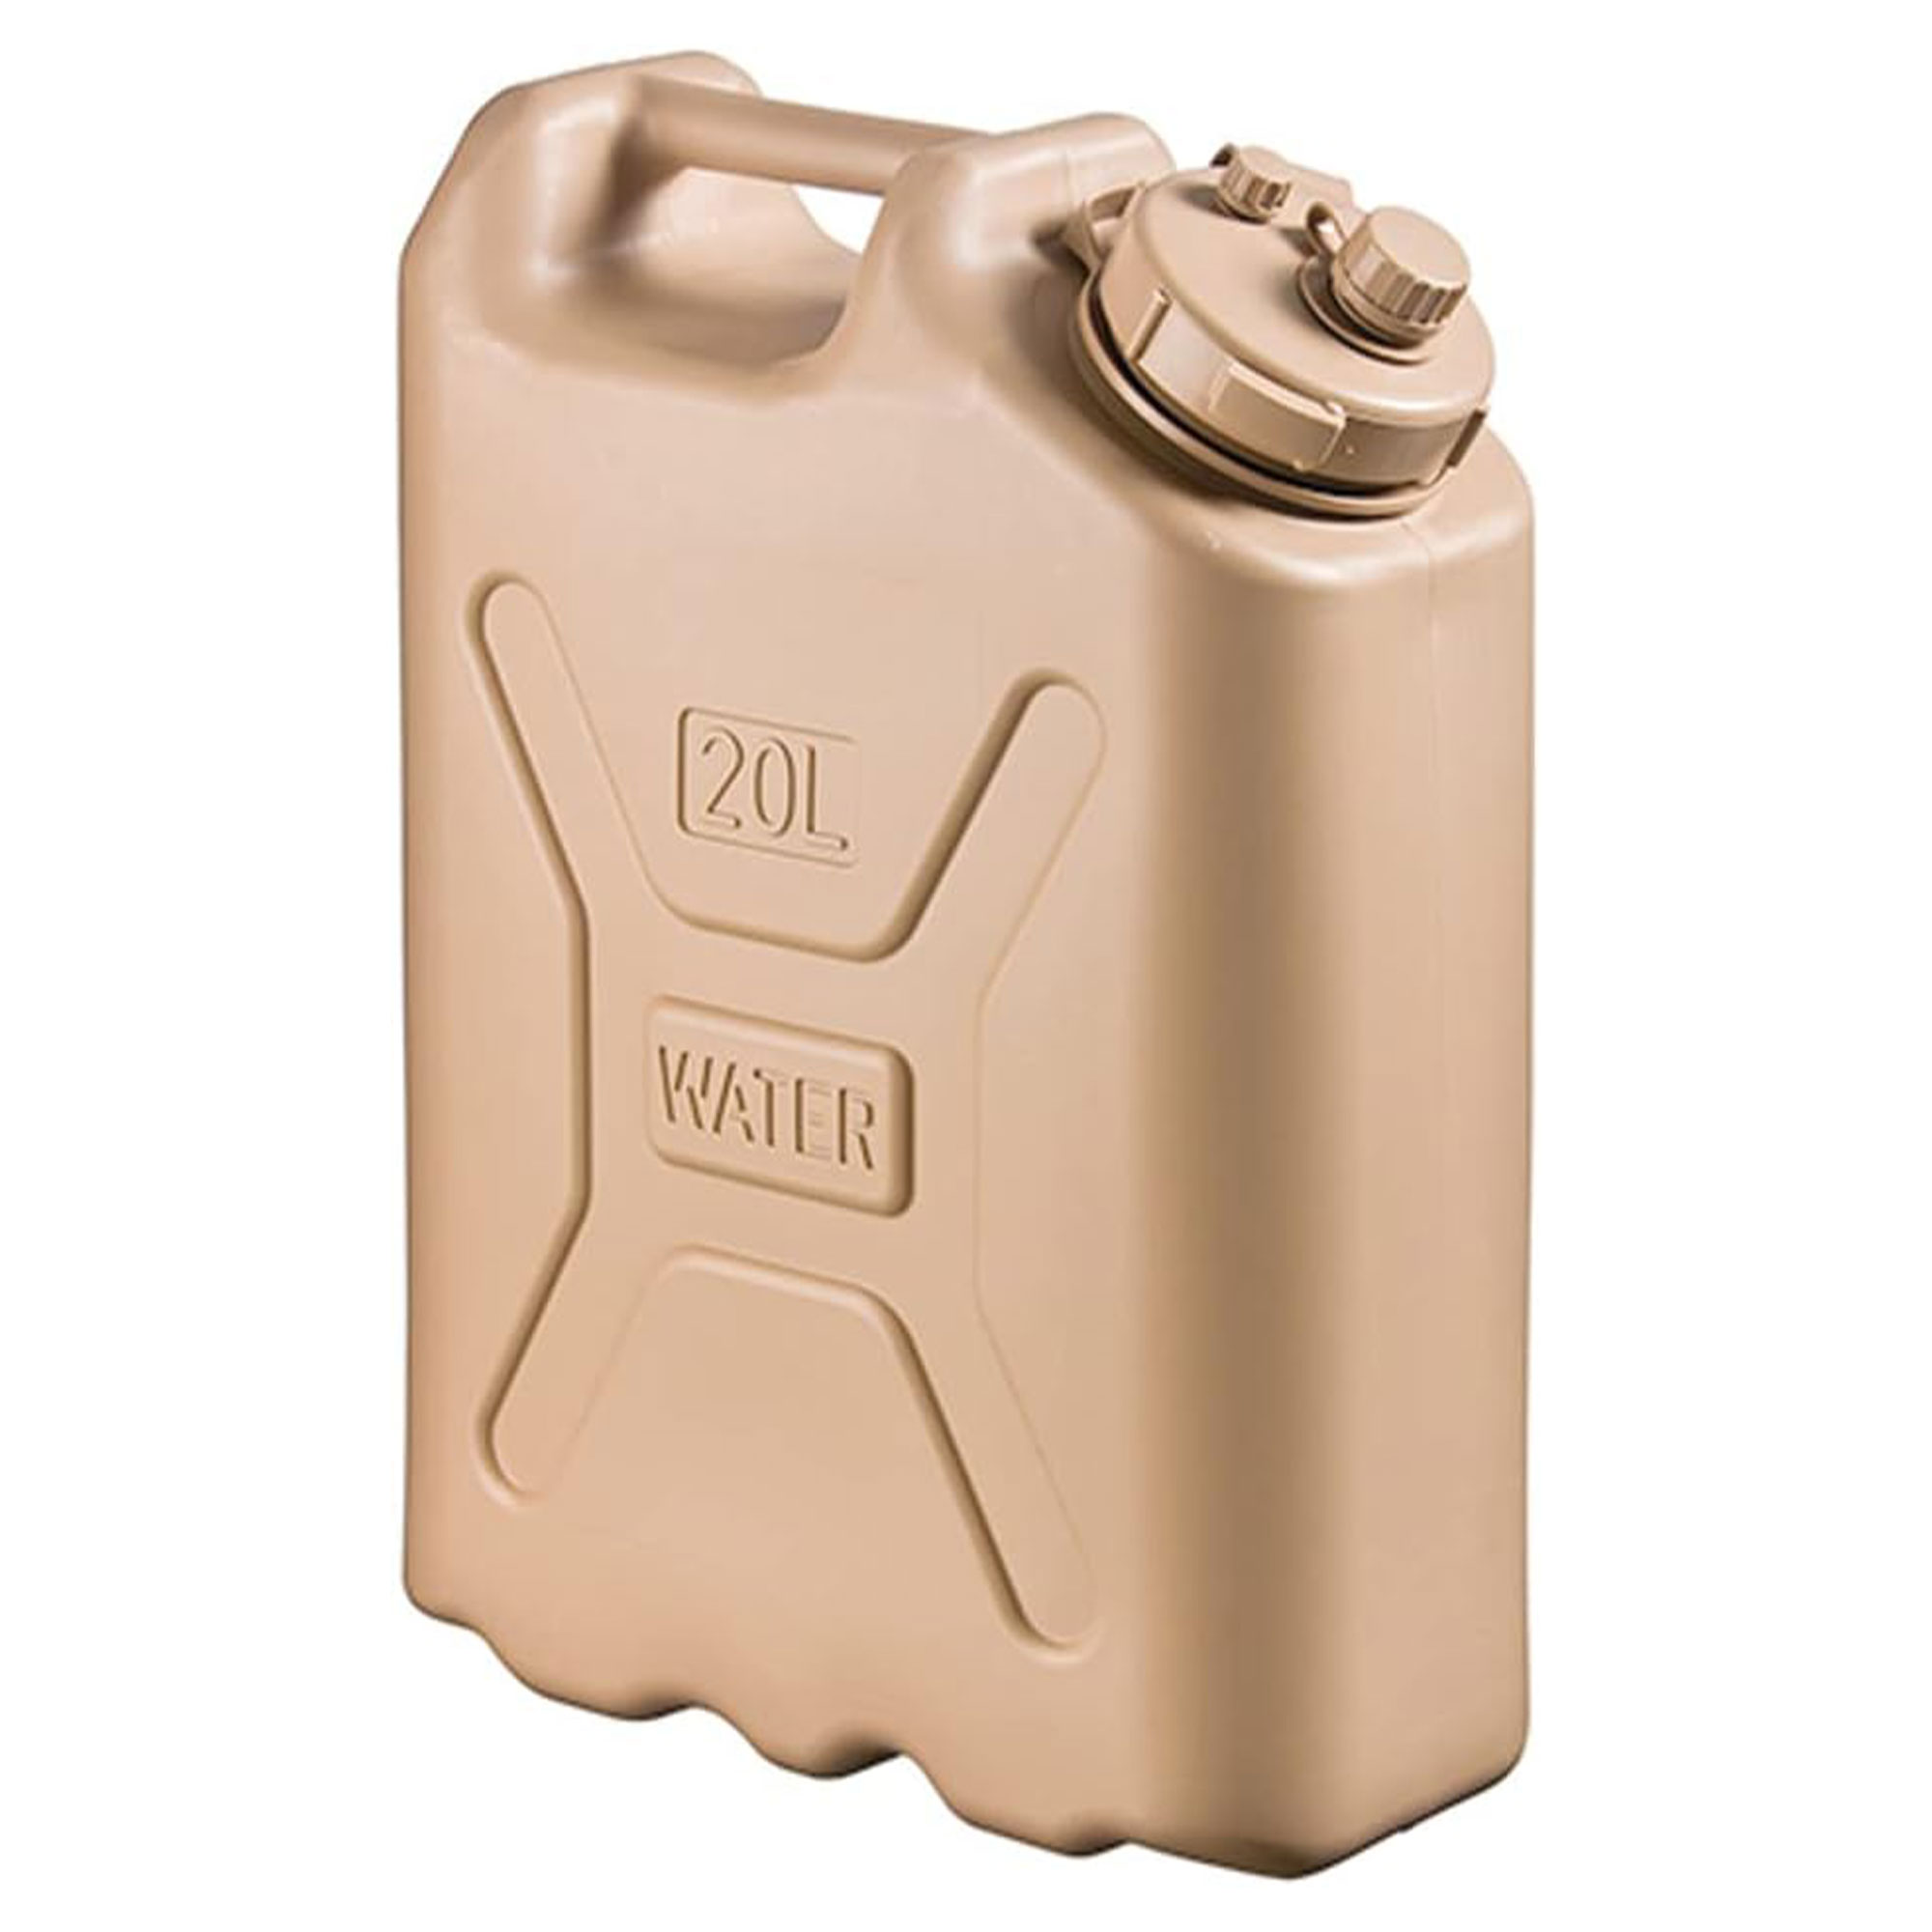 Scepter Lightweight BPA 5 Gallon 20 Liter Water Storage Container, Sand - image 1 of 12